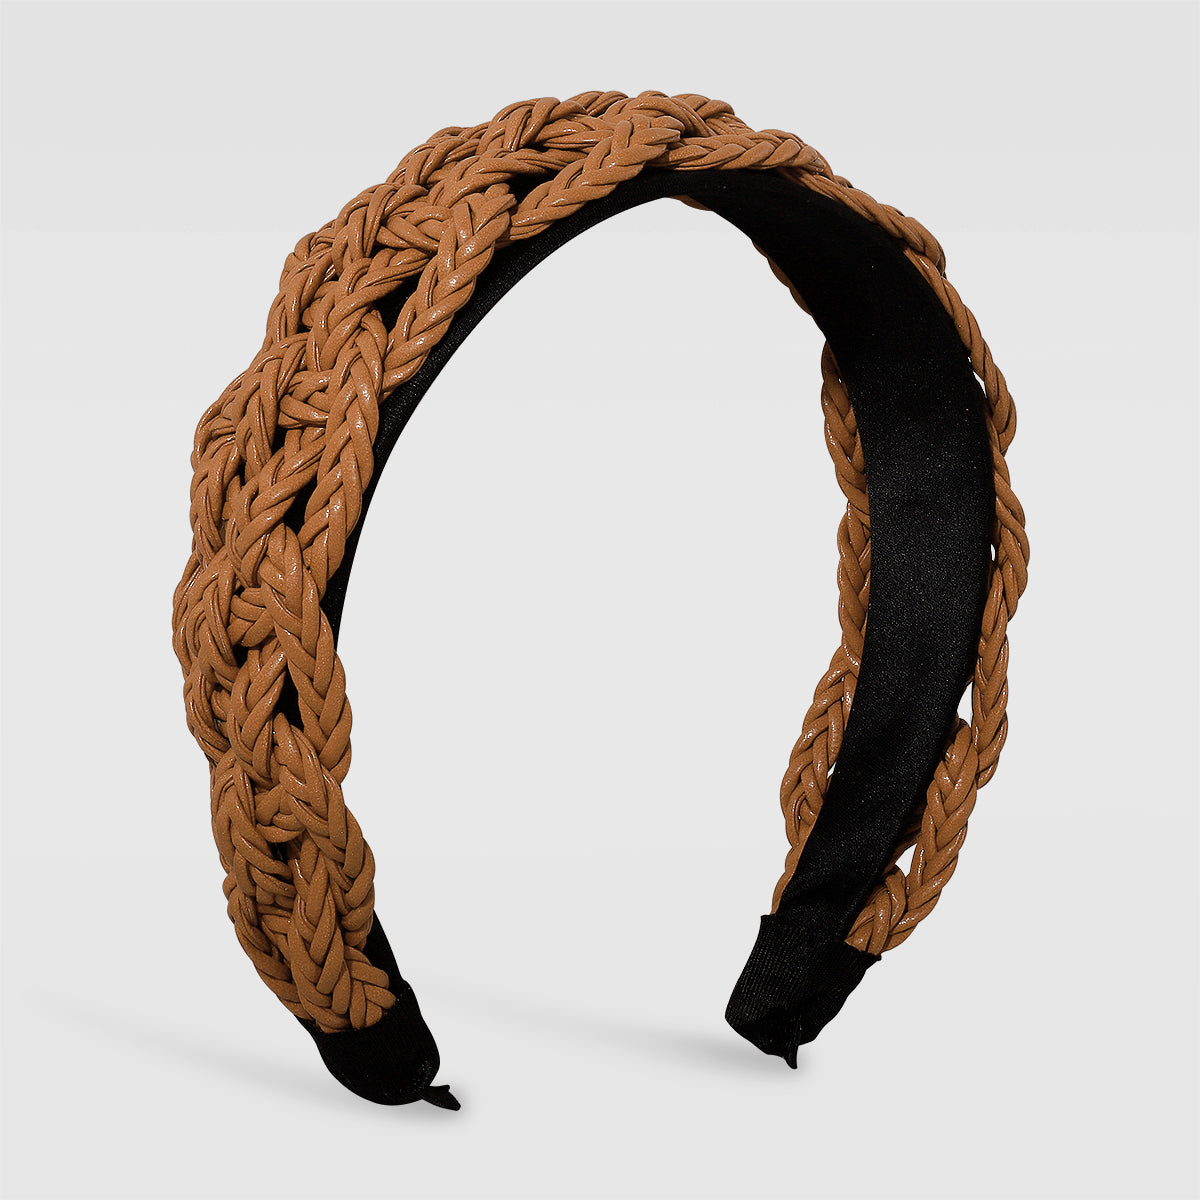 Fashion Twist PU leather Braid Non-slip Headbands medyjewelry